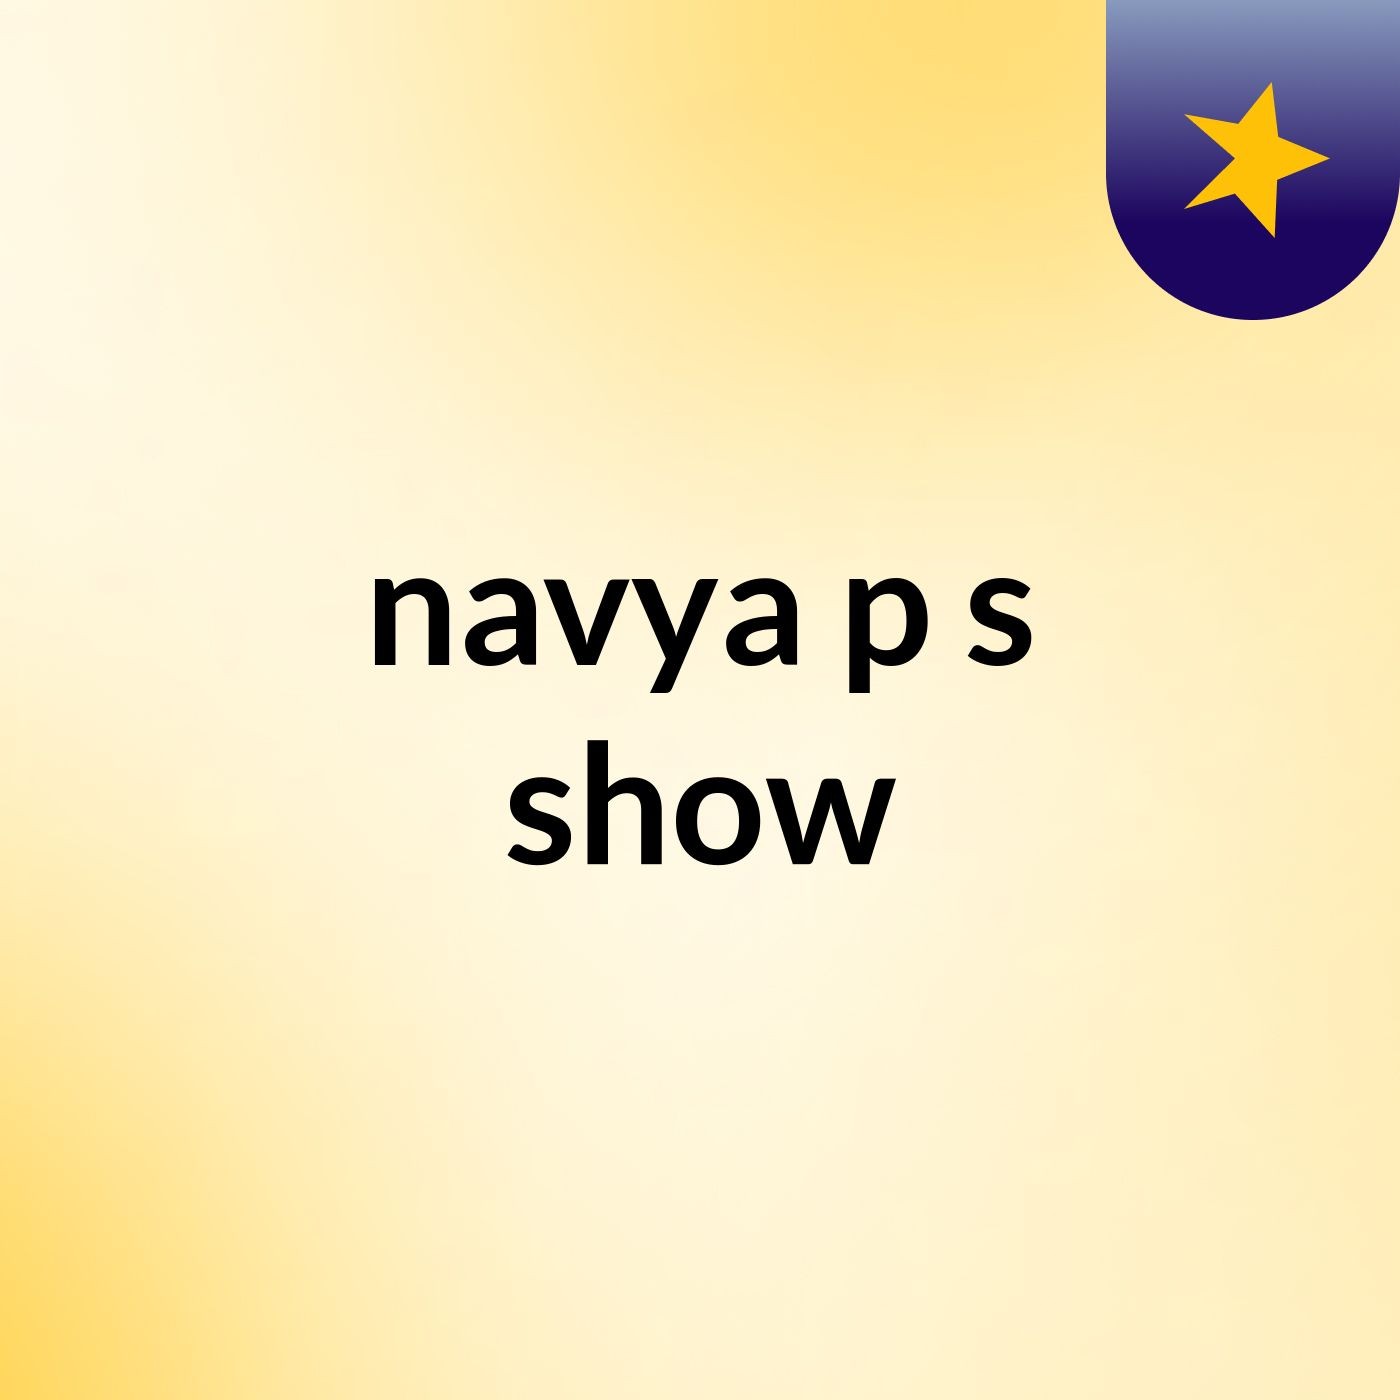 navya p's show